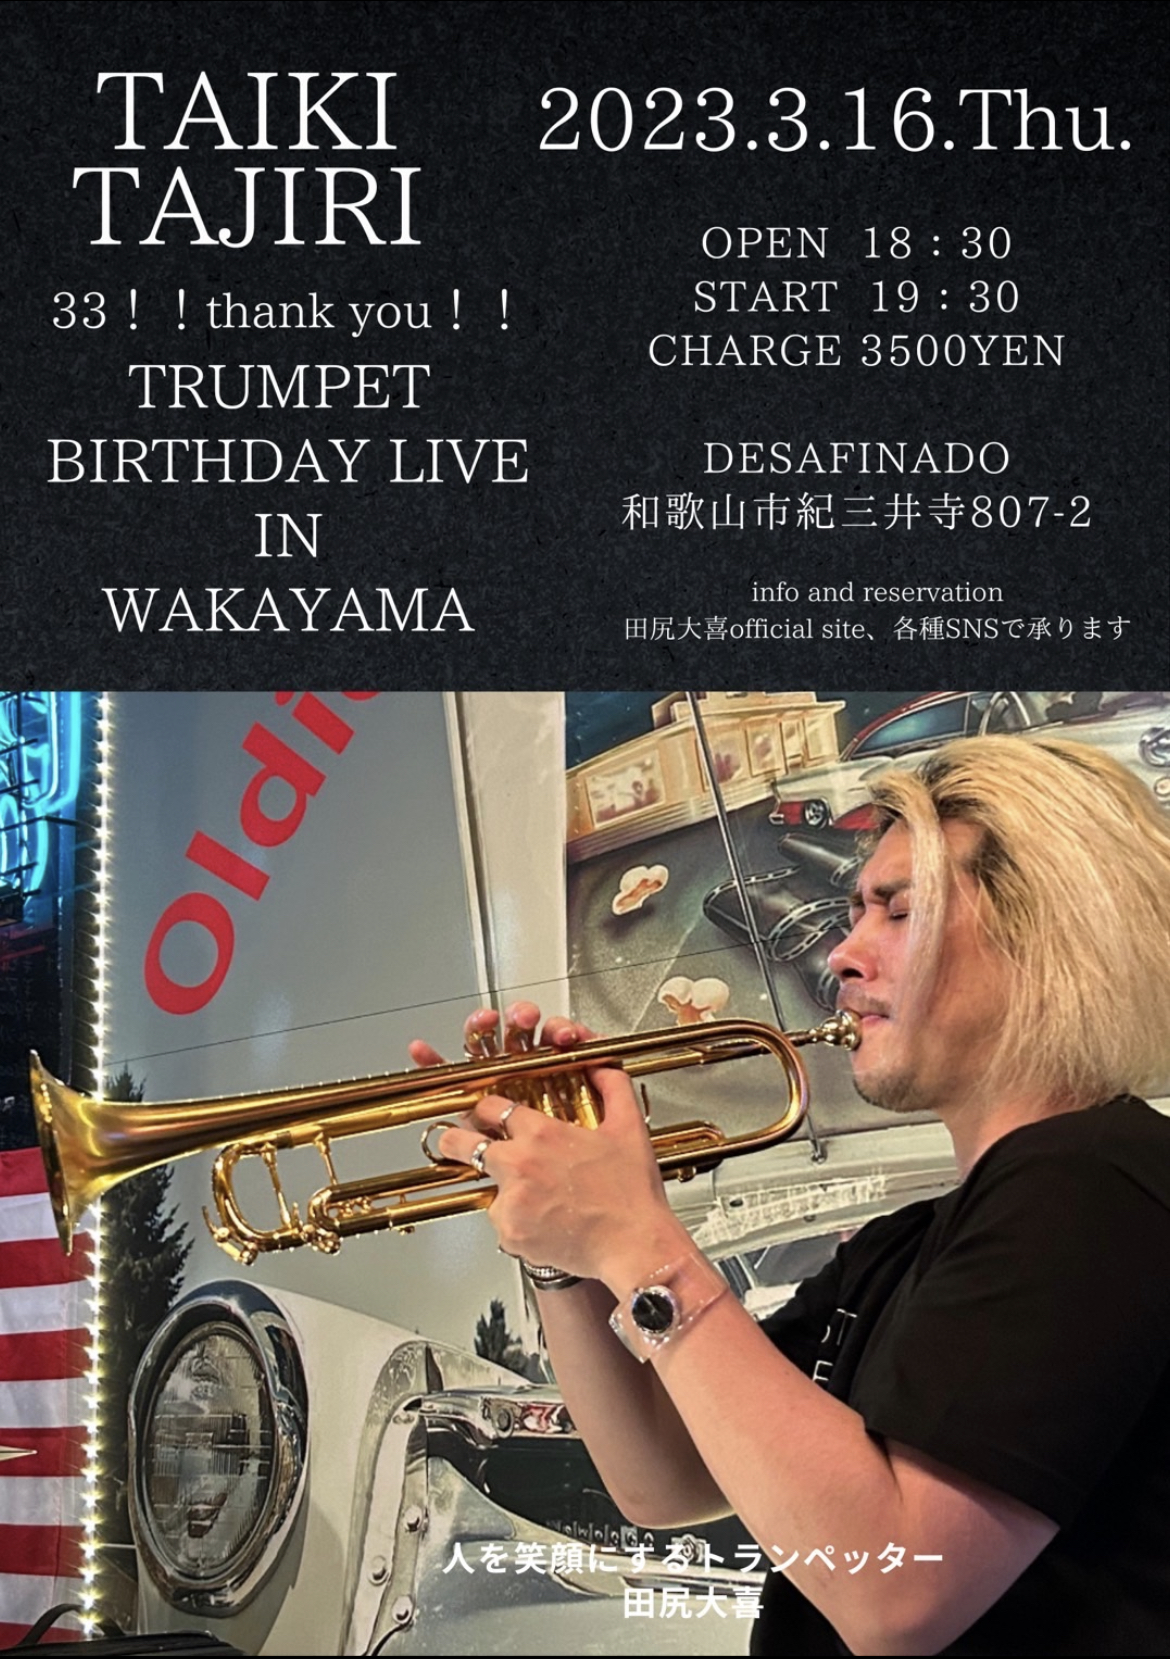 33 thank you birthday Live